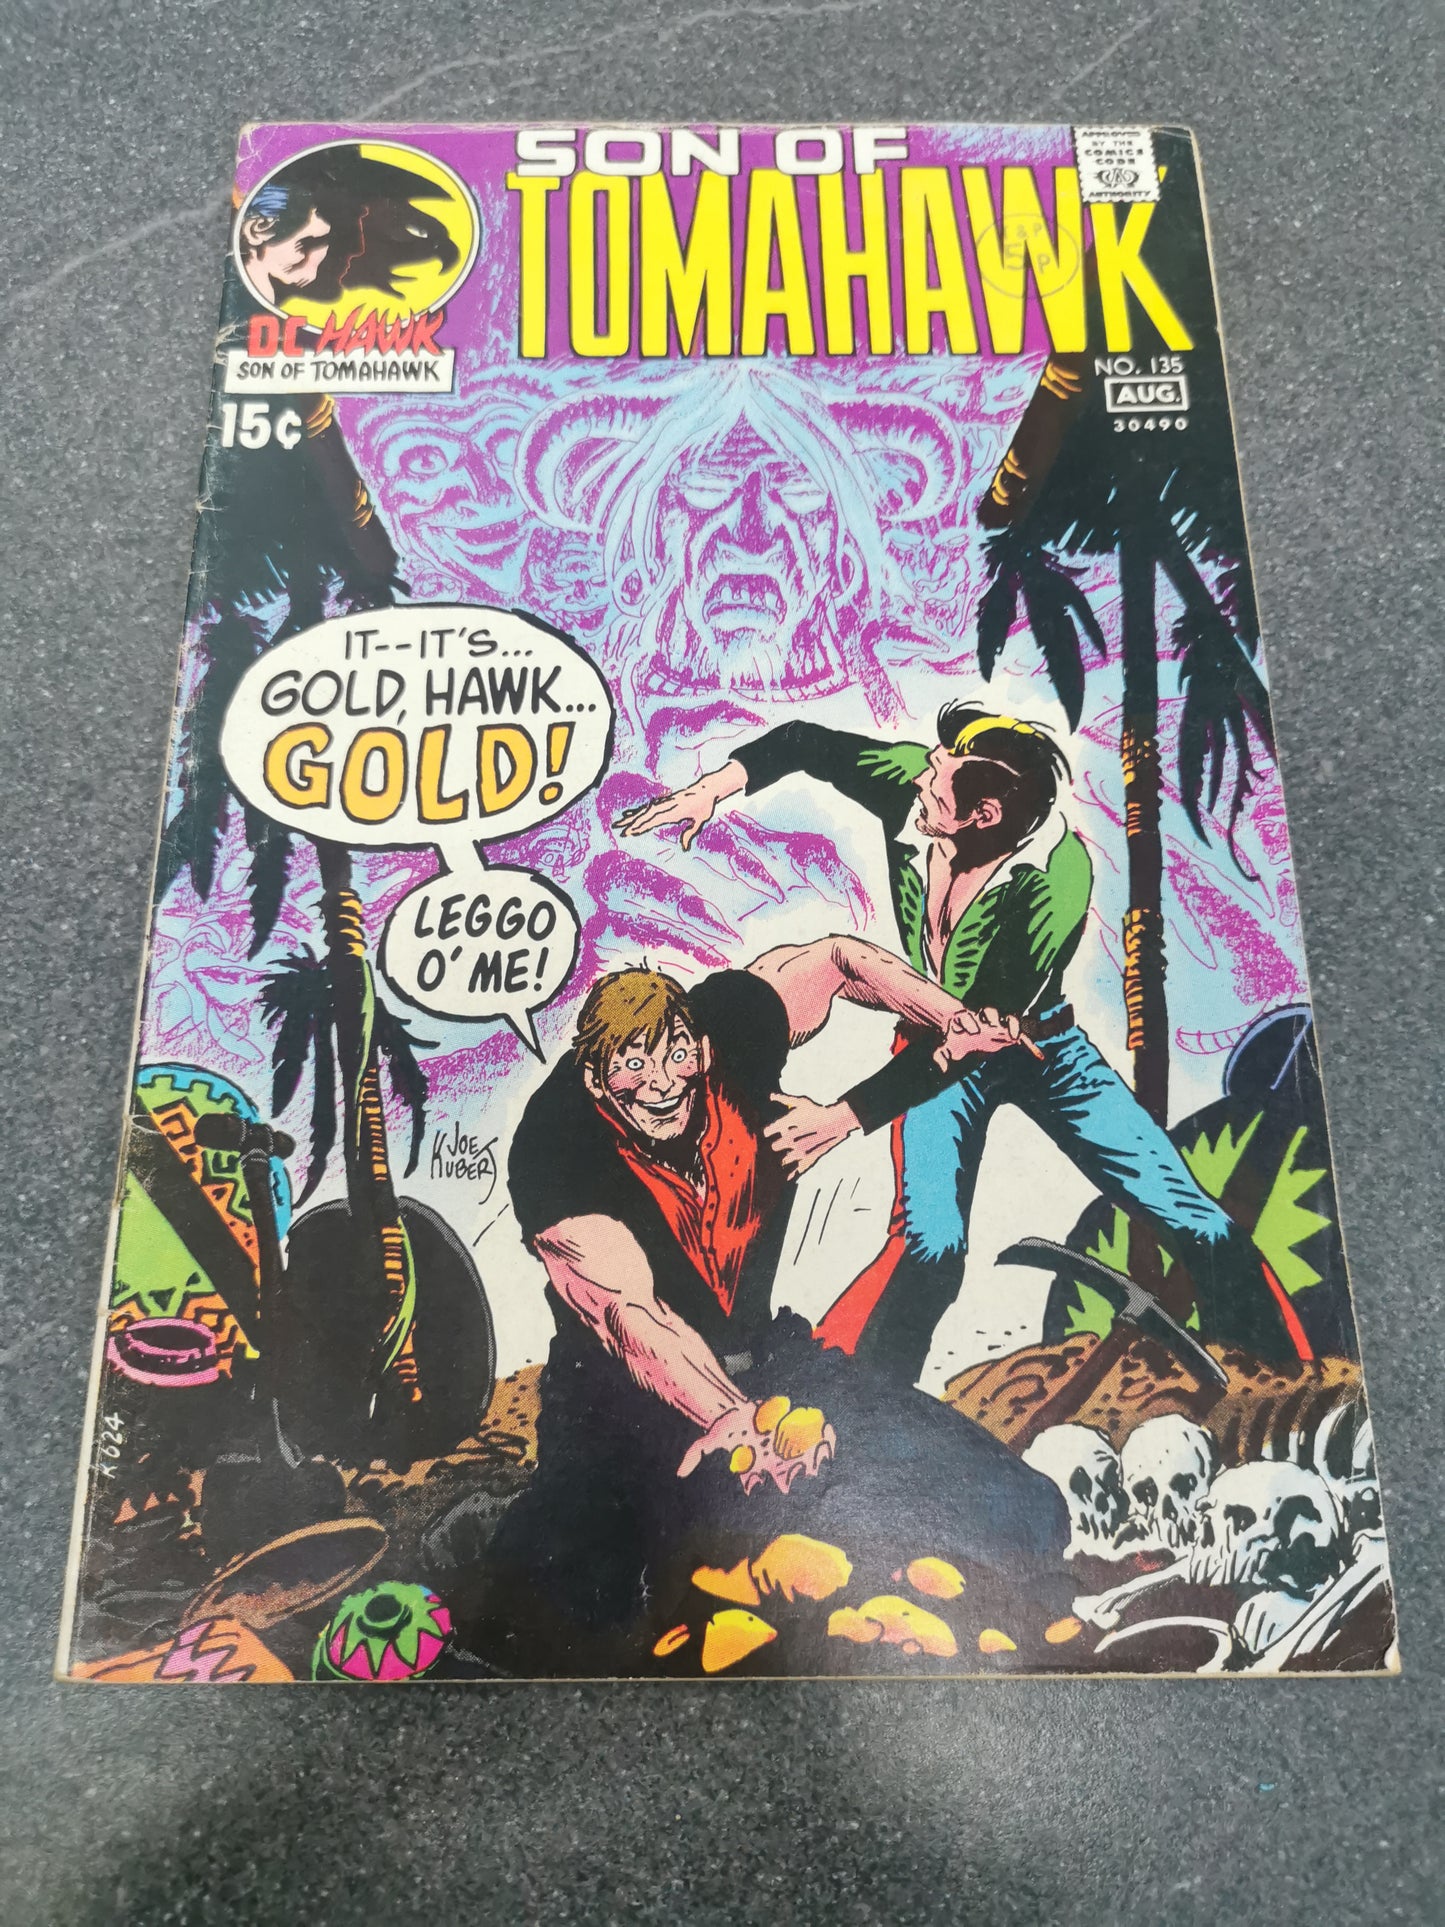 Tomahawk #135 1971 DC comic